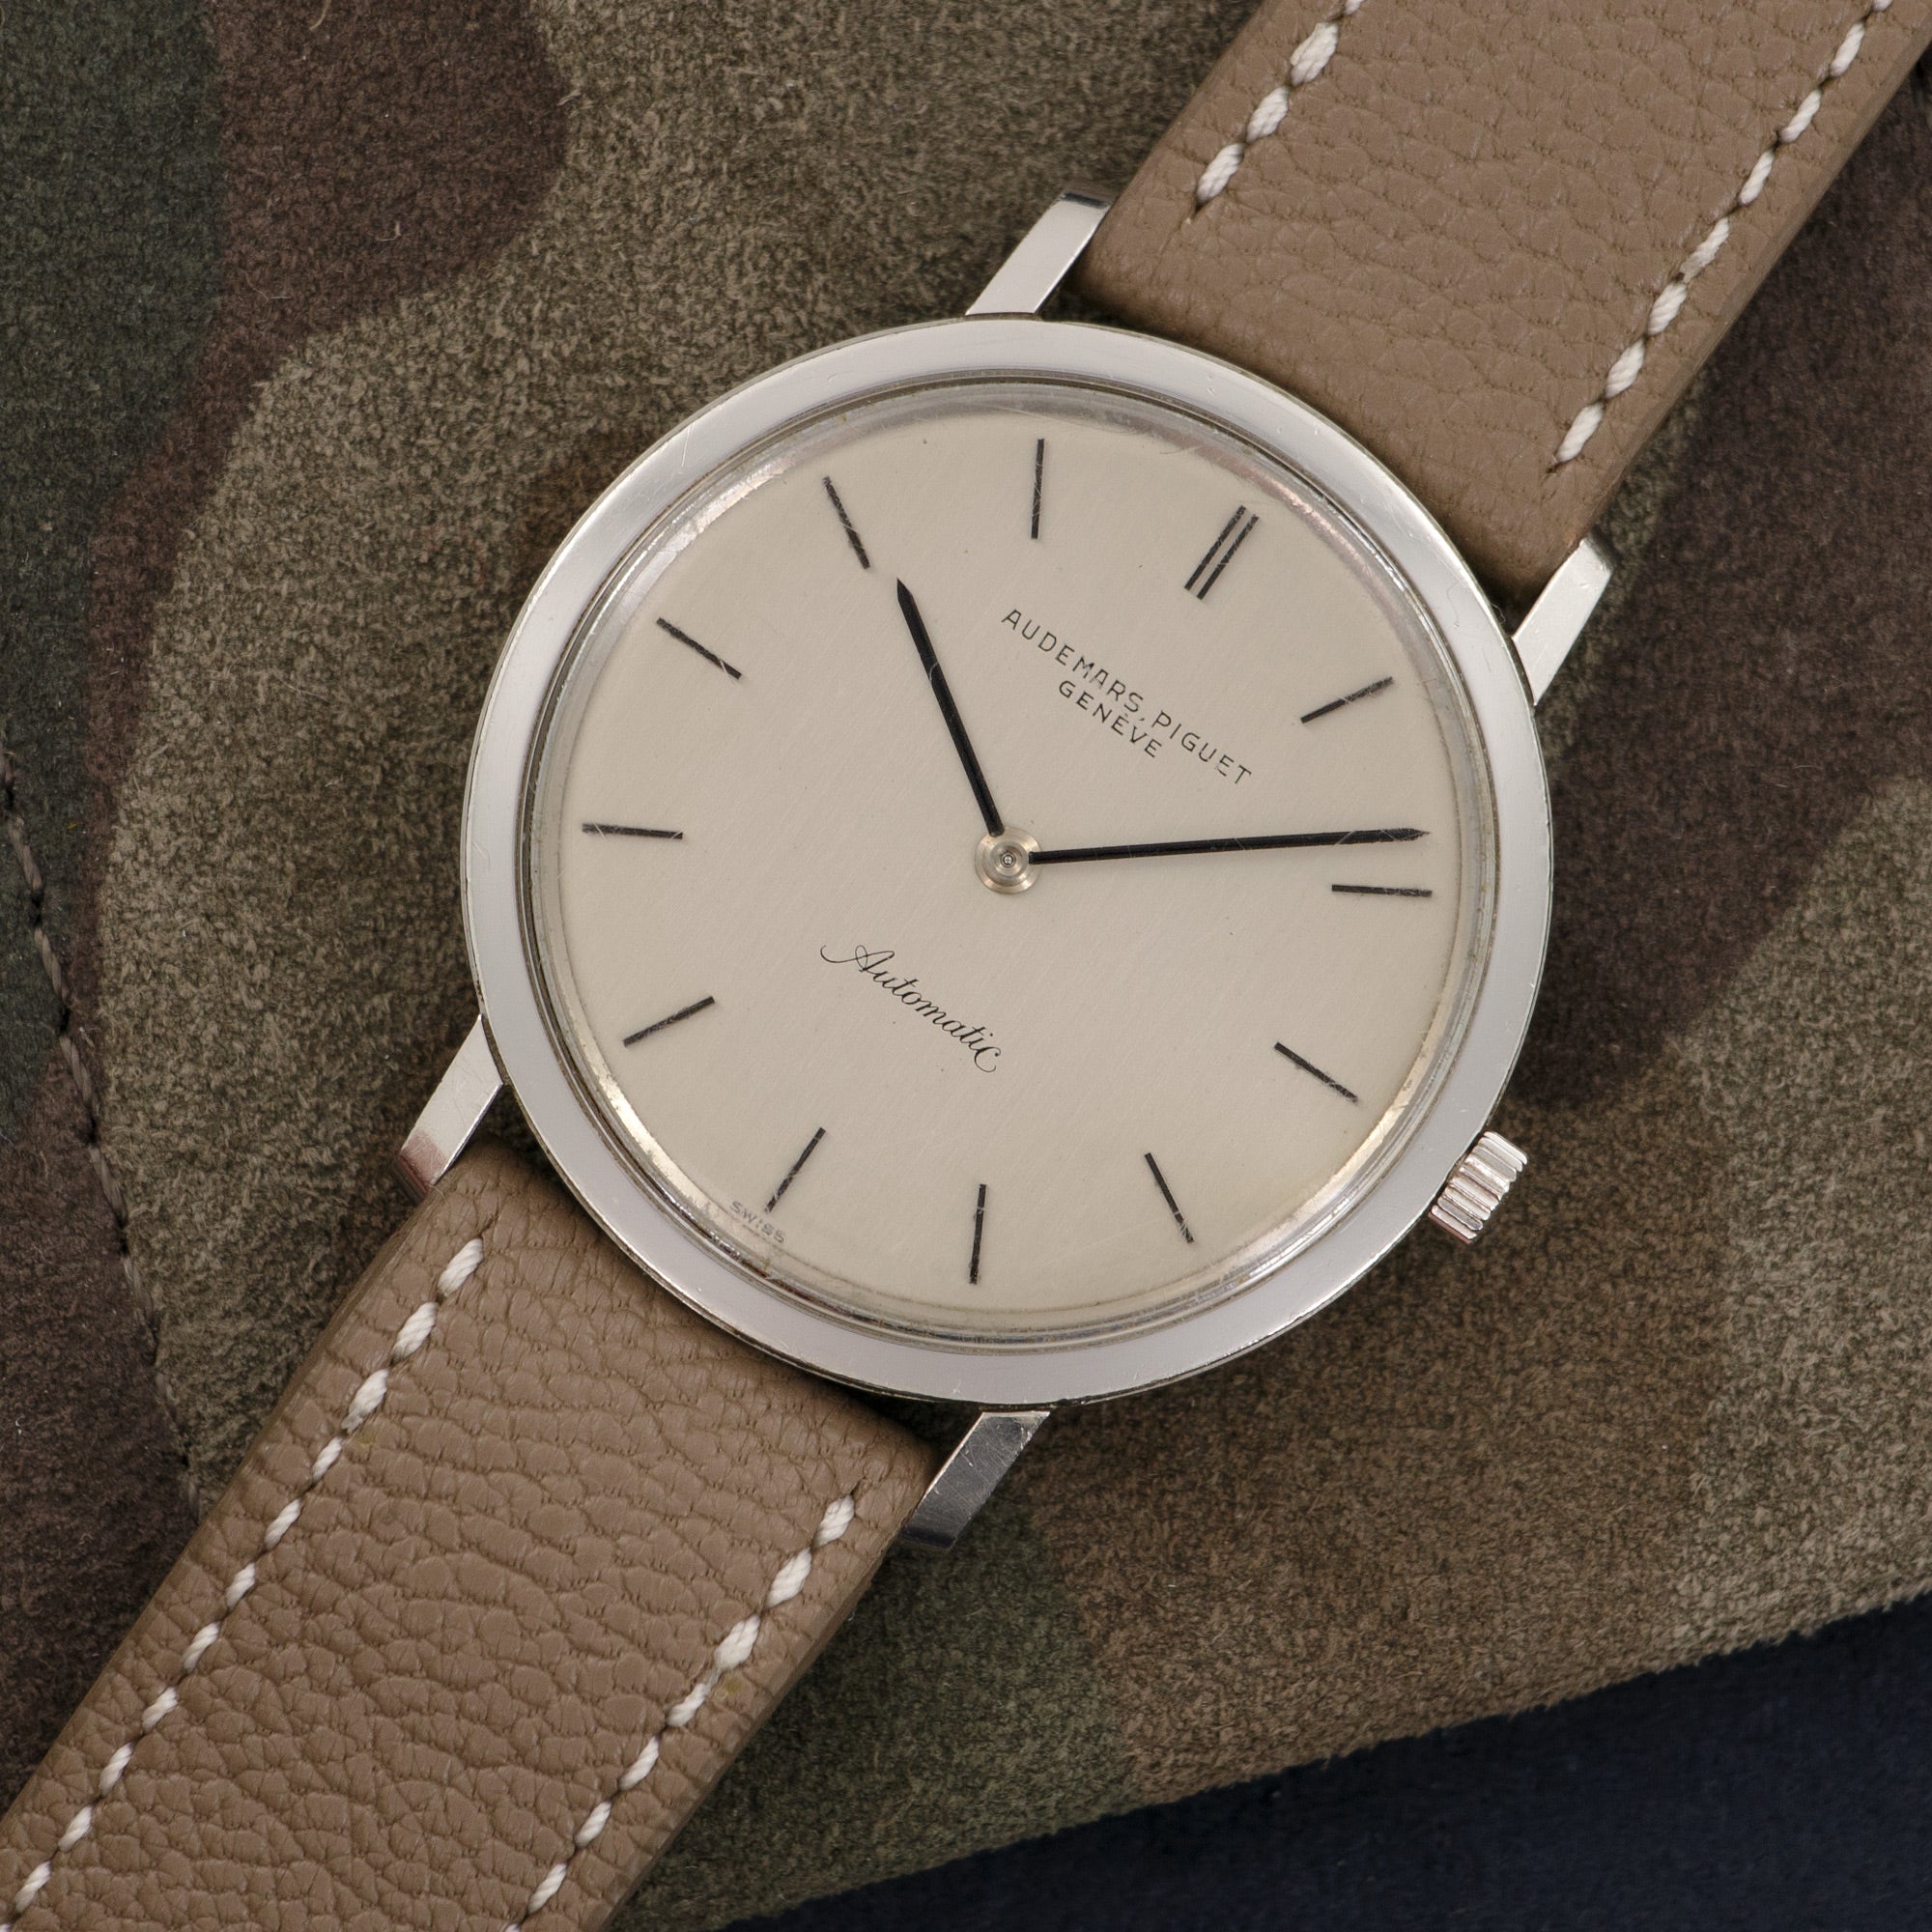 Audemars Piguet - Audemars Piguet Steel Automatic Strap Watch, Ref. 5273 - The Keystone Watches